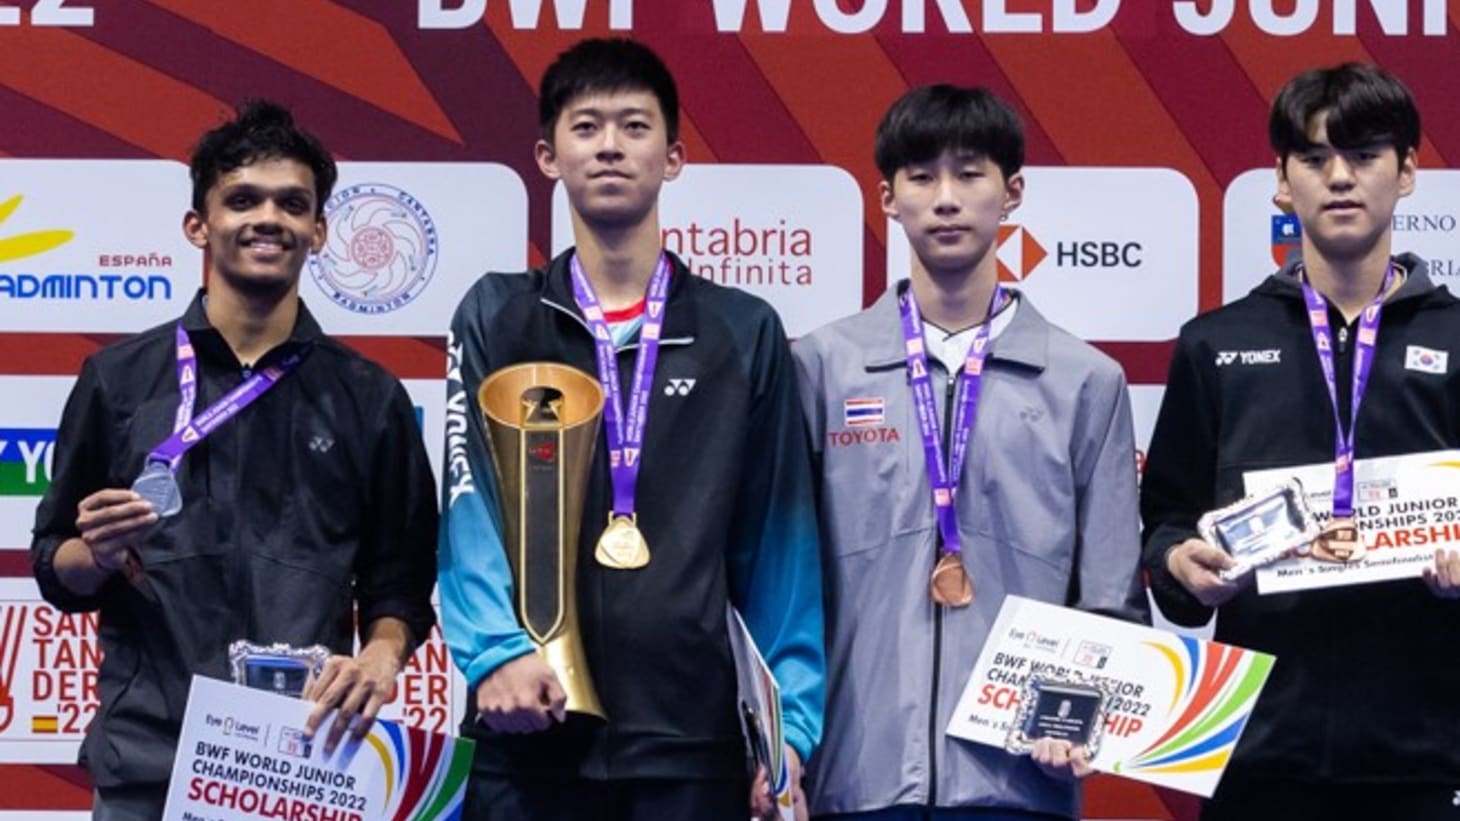 Badminton World Junior Championships 2022 China win three of five finals on last day